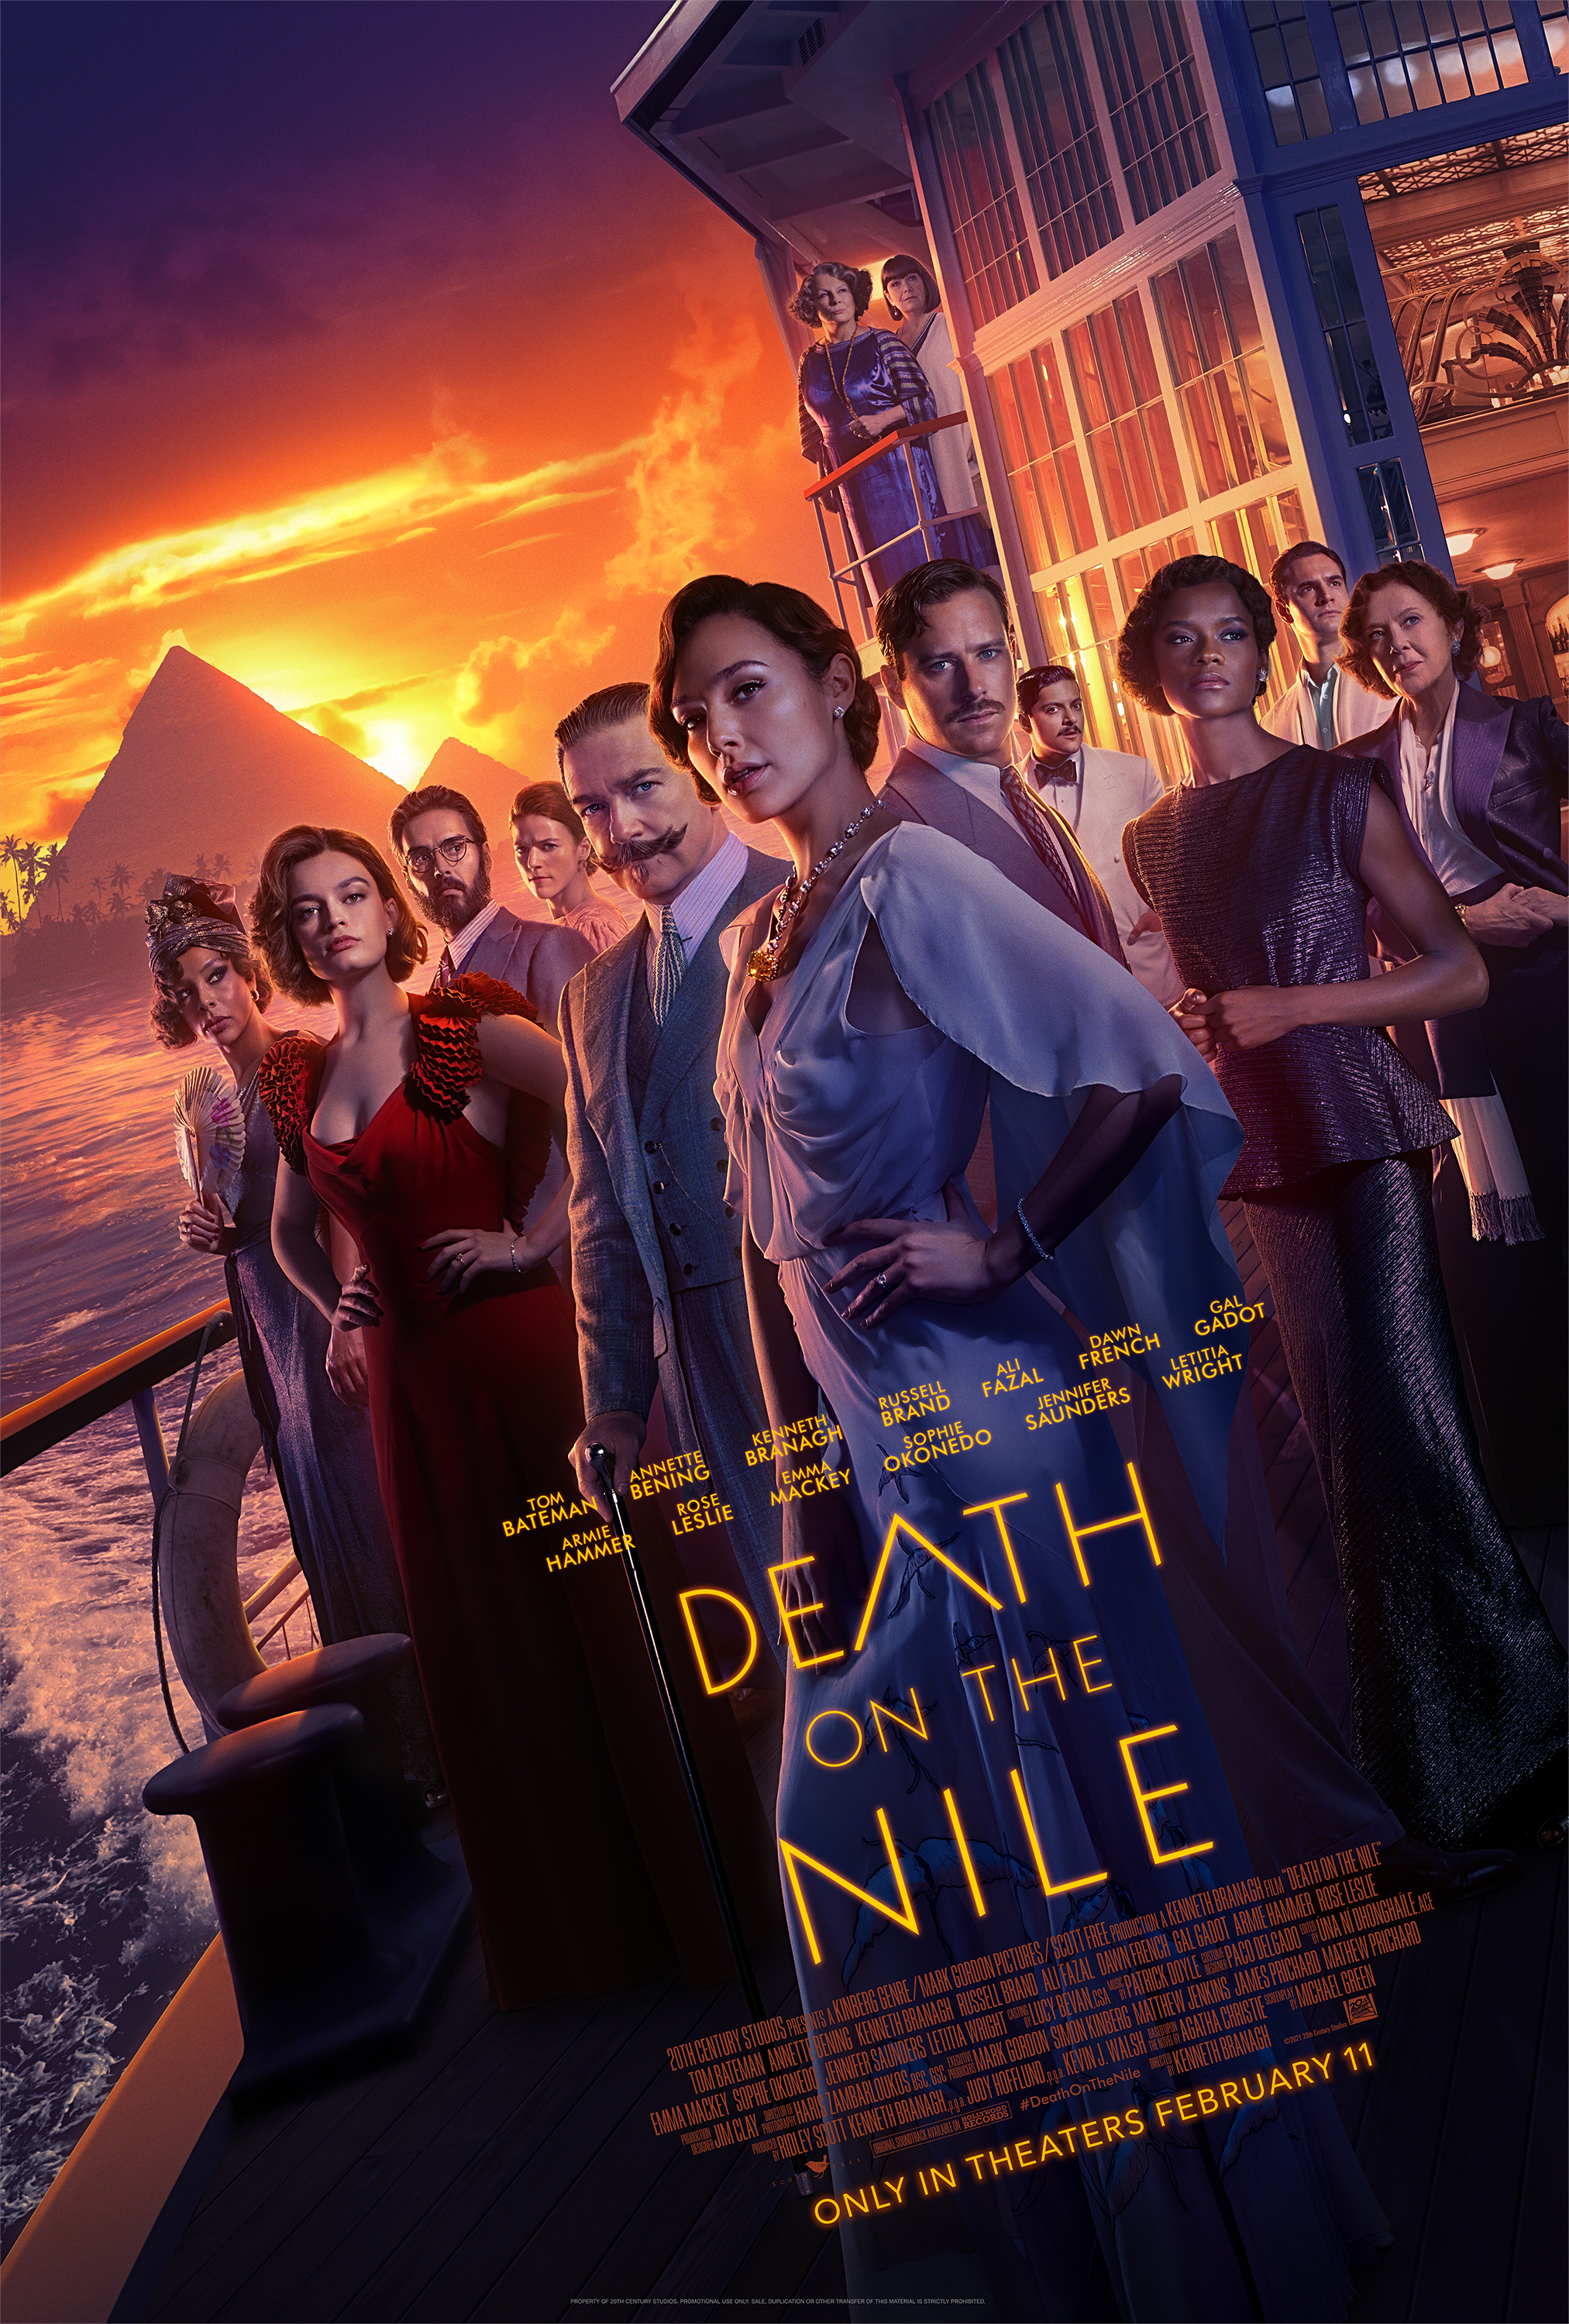 Stiahni si Filmy bez titulků Smrt na Nilu / Death on the Nile (2022)[1080p] = CSFD 73%